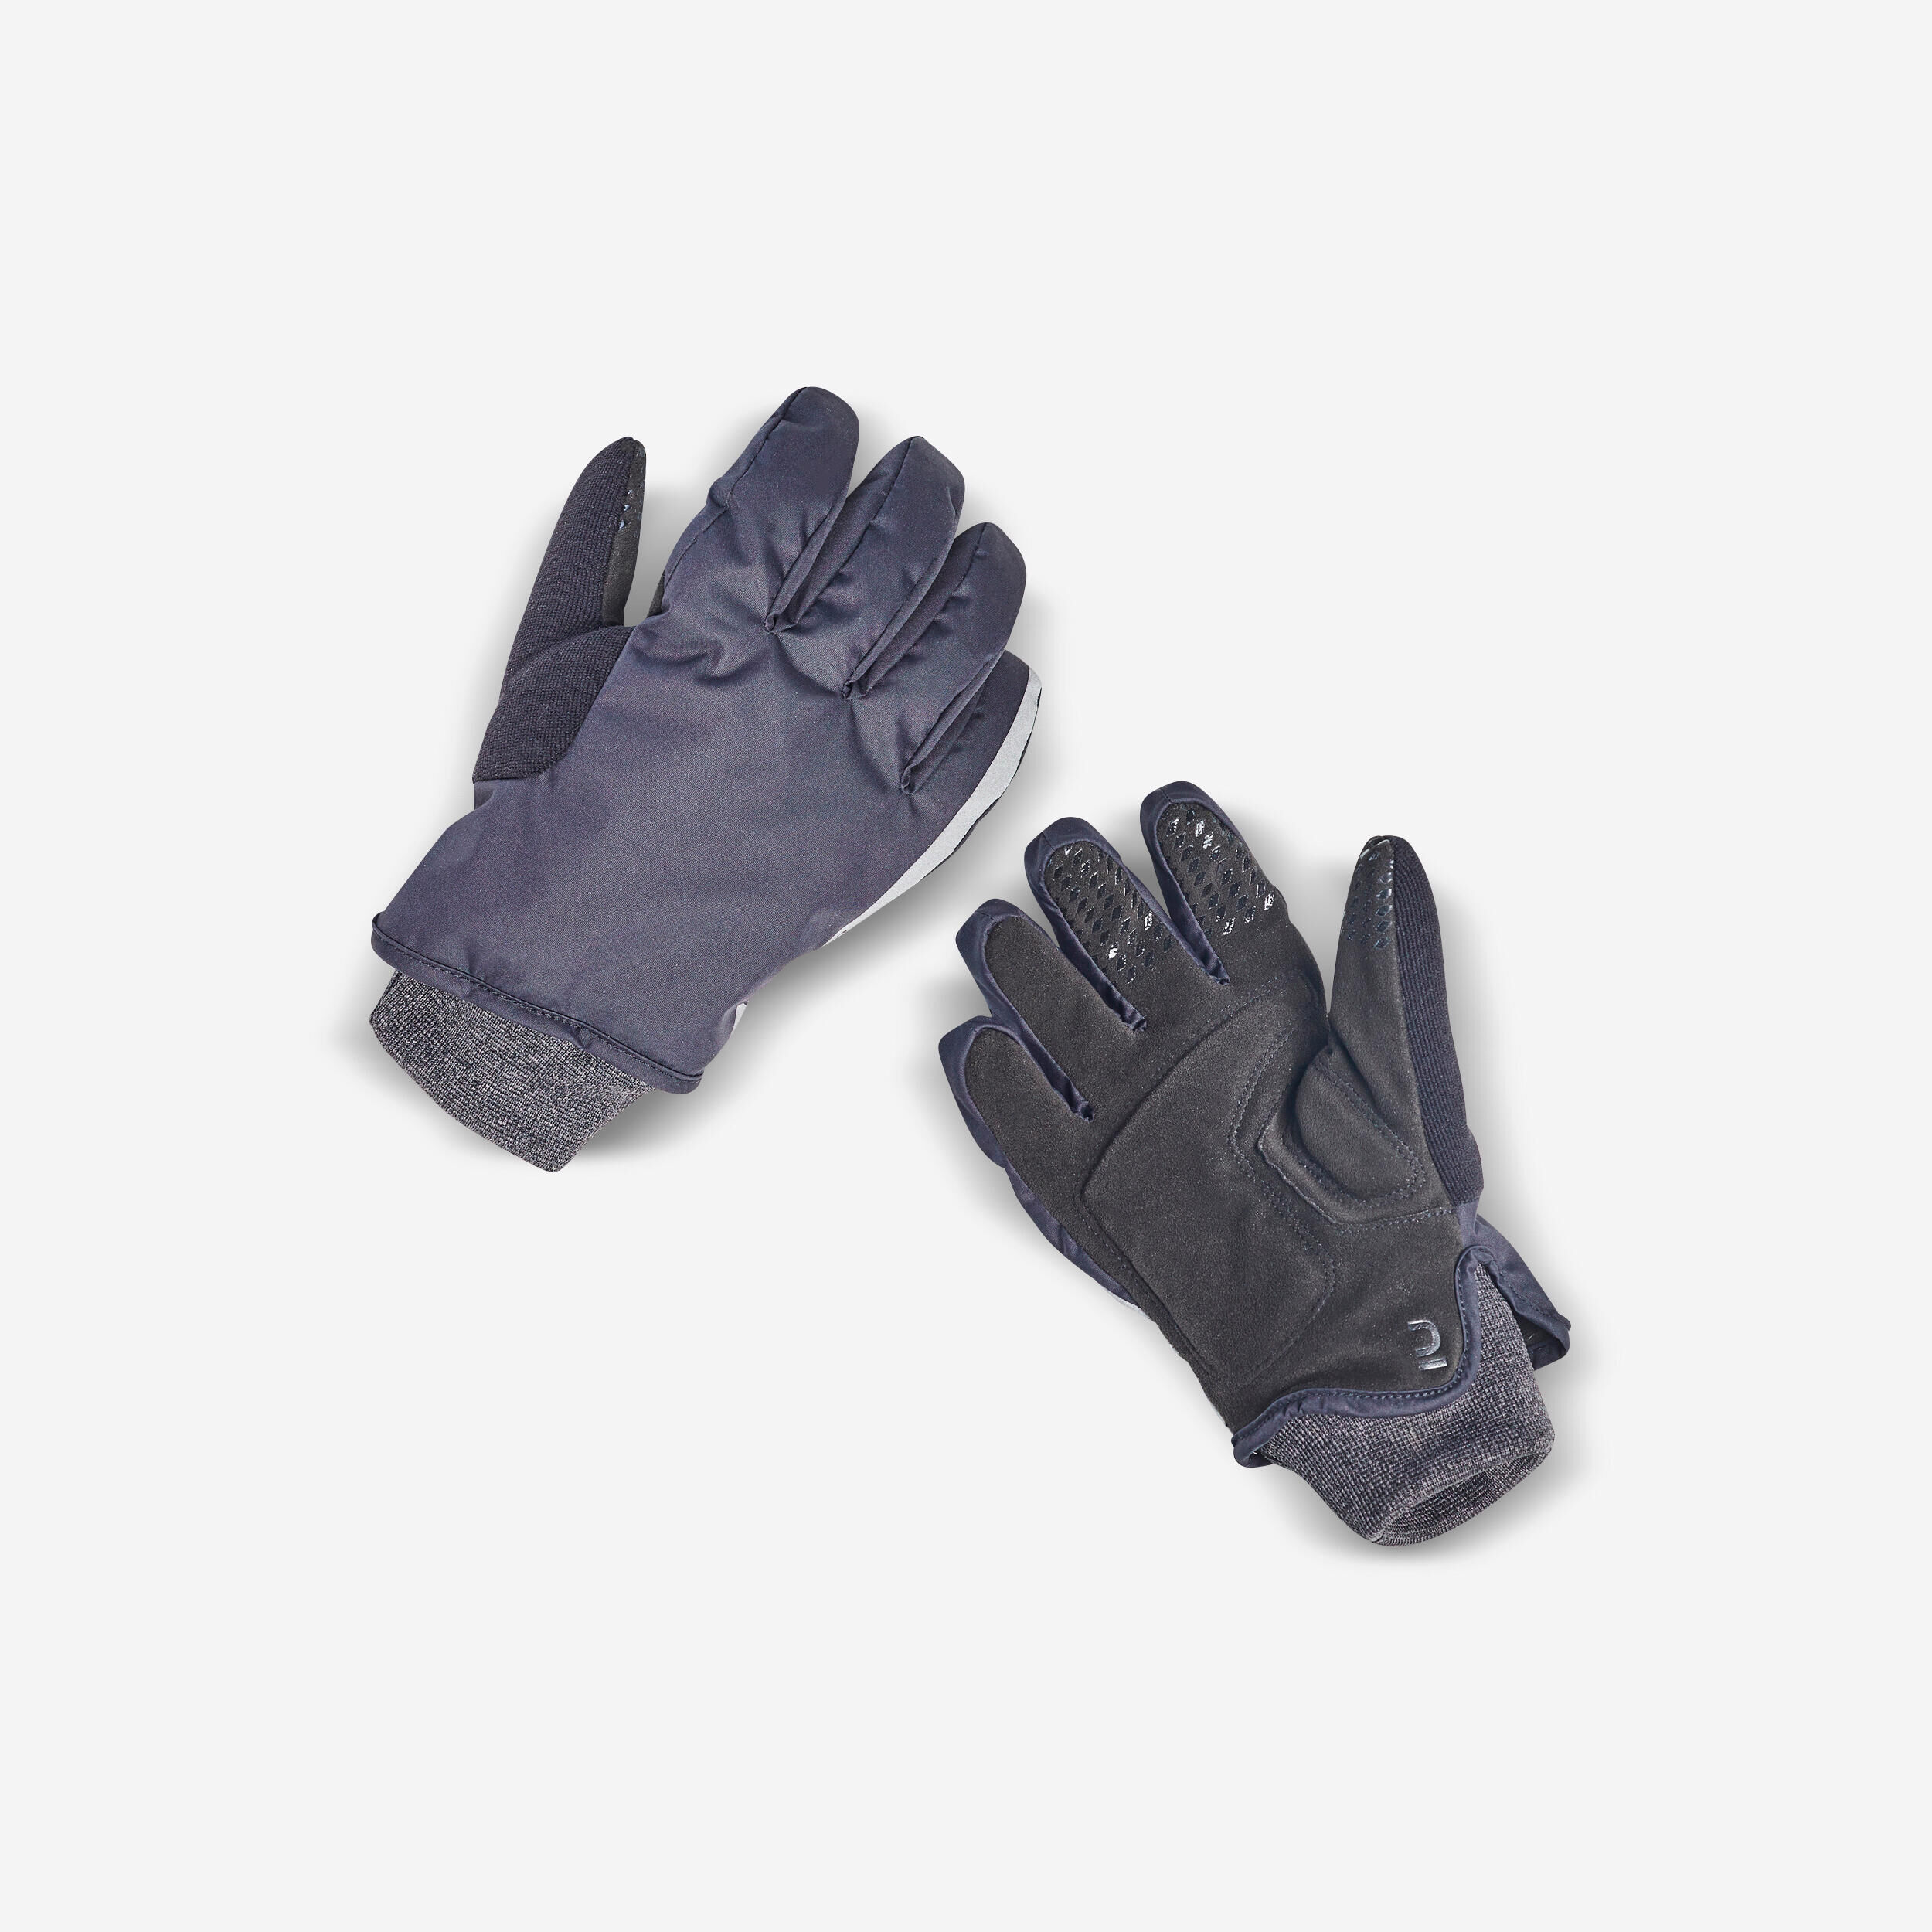 BTWIN Kids' Winter Cycling Gloves 500 - Black